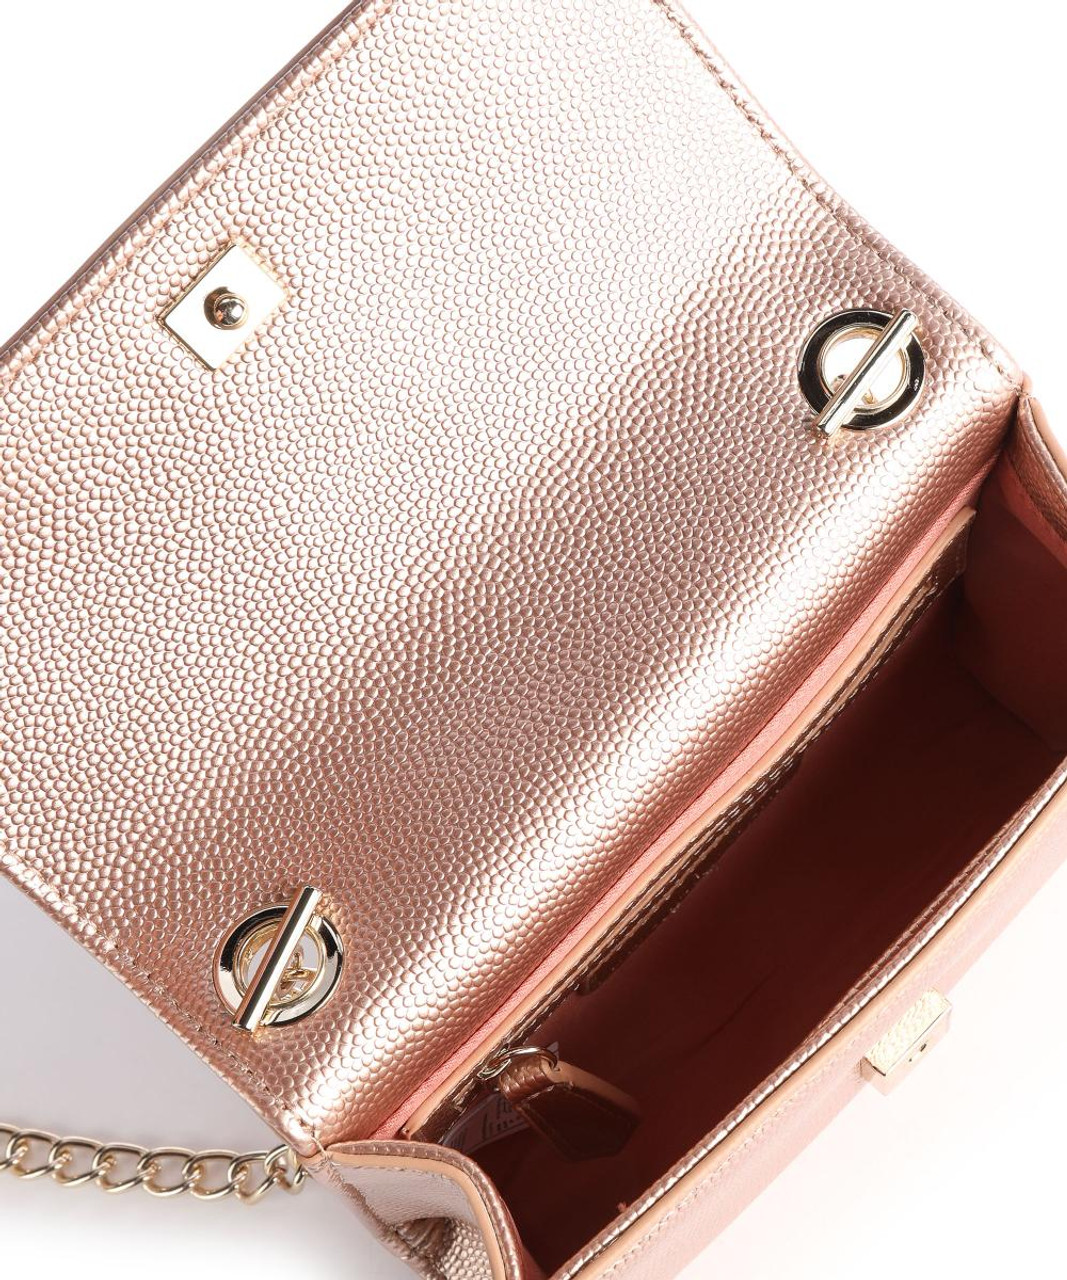 Valentino Handbags Crossbody Bag Divina Clutch Pink